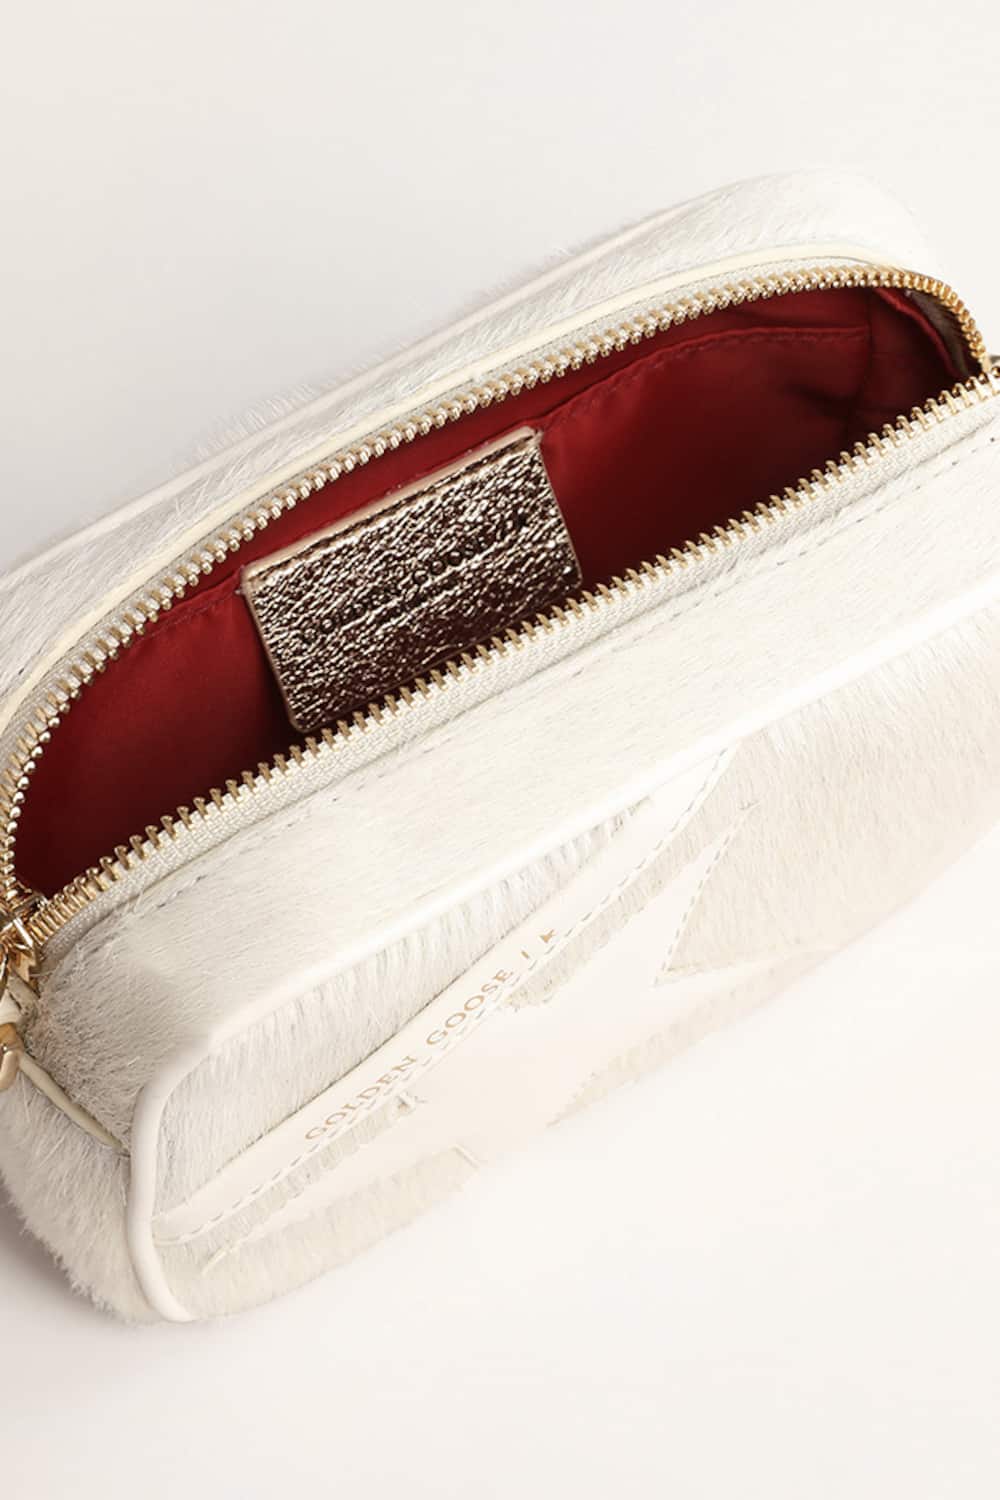 Golden Goose - Mini Star Bag in pelle color bianco heritage con stella ton sur ton in 